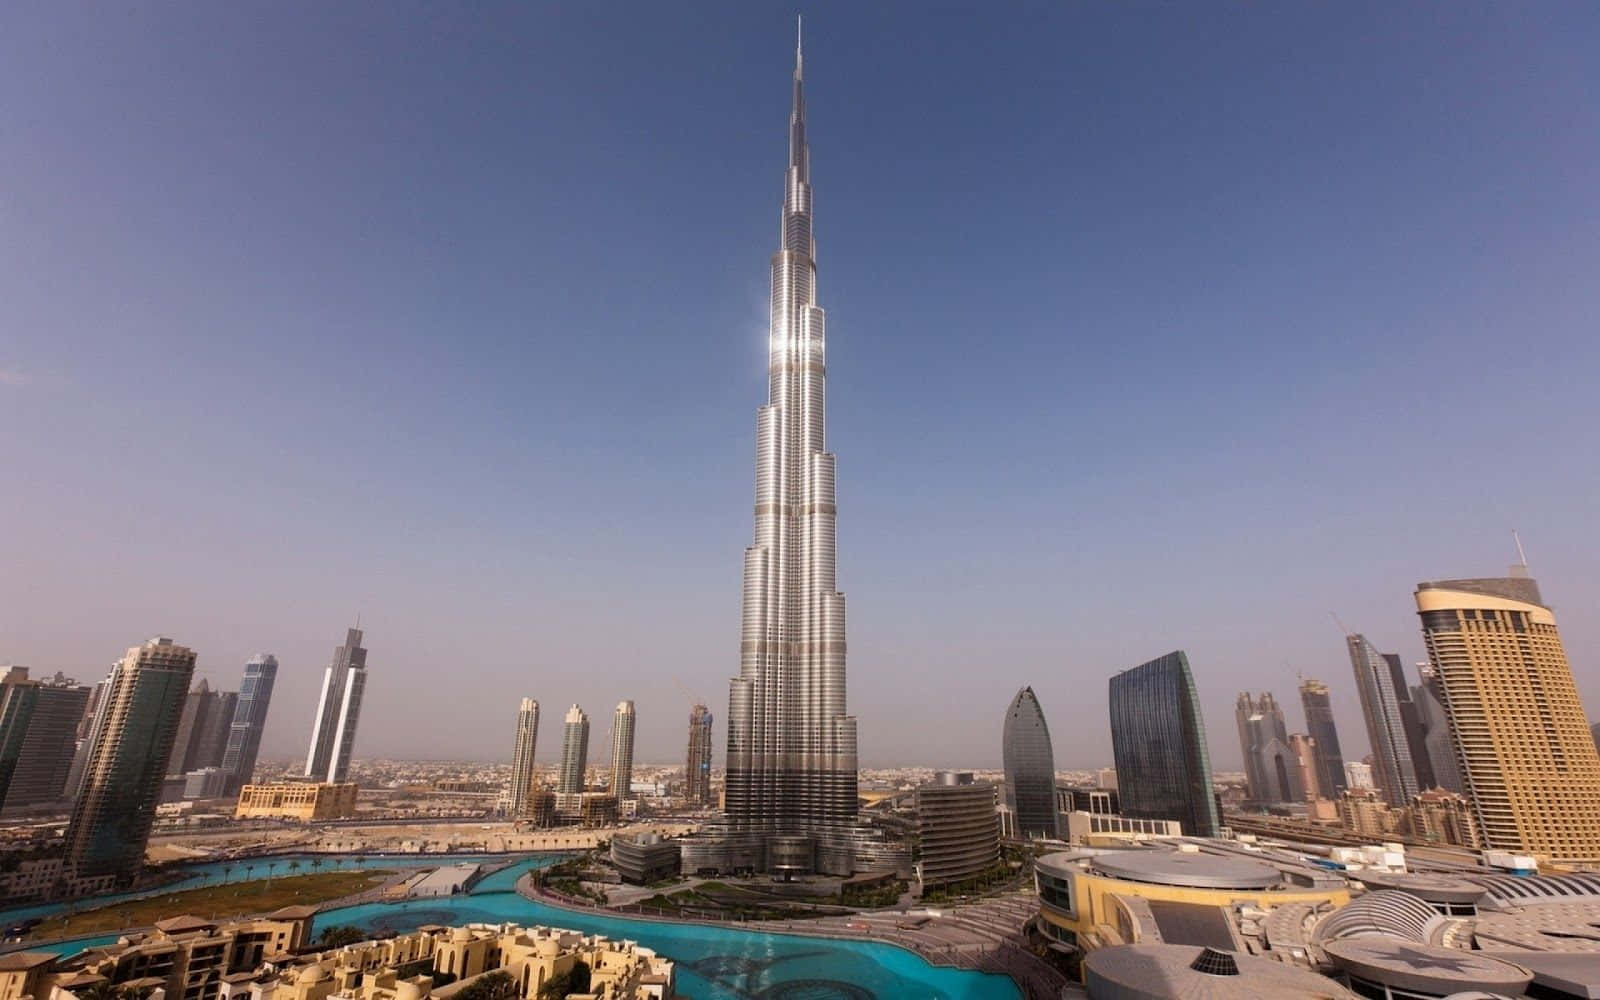 An awe-inspiring view of Burj Khalifa against the dramatic evening sky